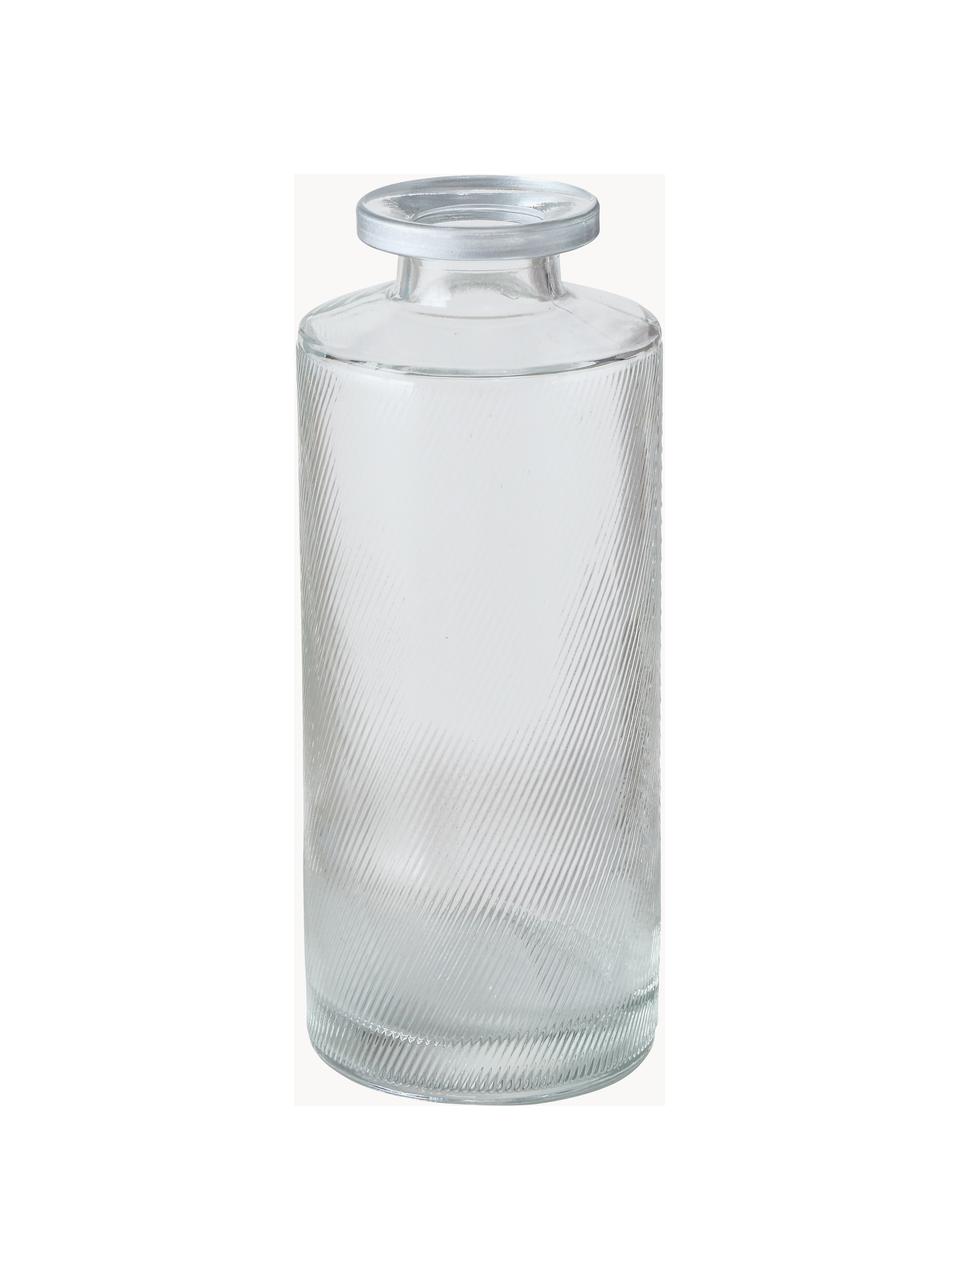 Kleine vazen Adore van glas, set van 3, Glas, Transparant, zilverkleurig, Ø 5 x H 13 cm